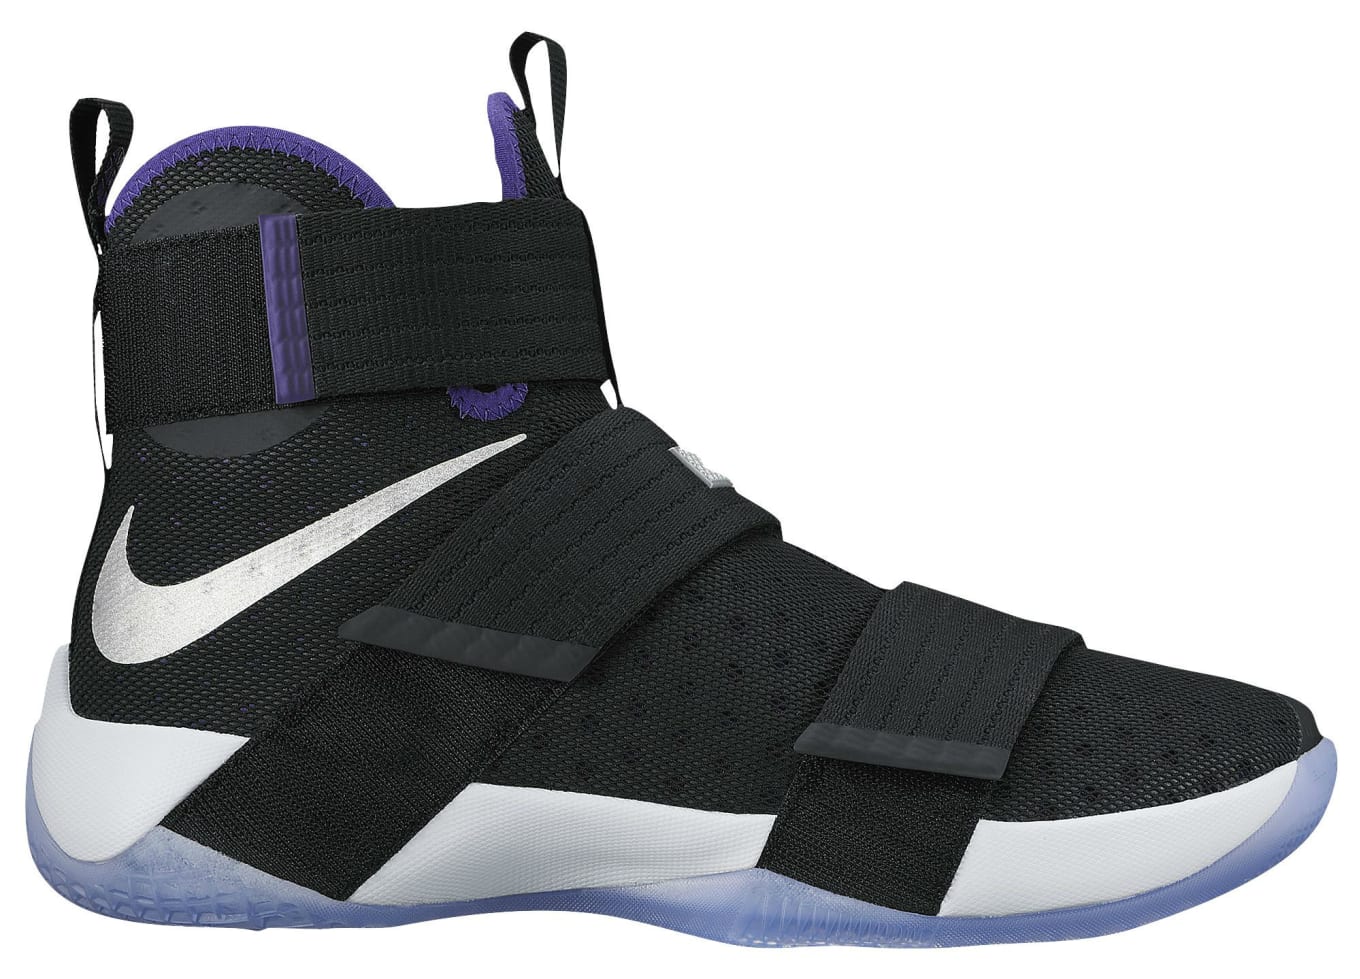 lebron james shoes black and purple